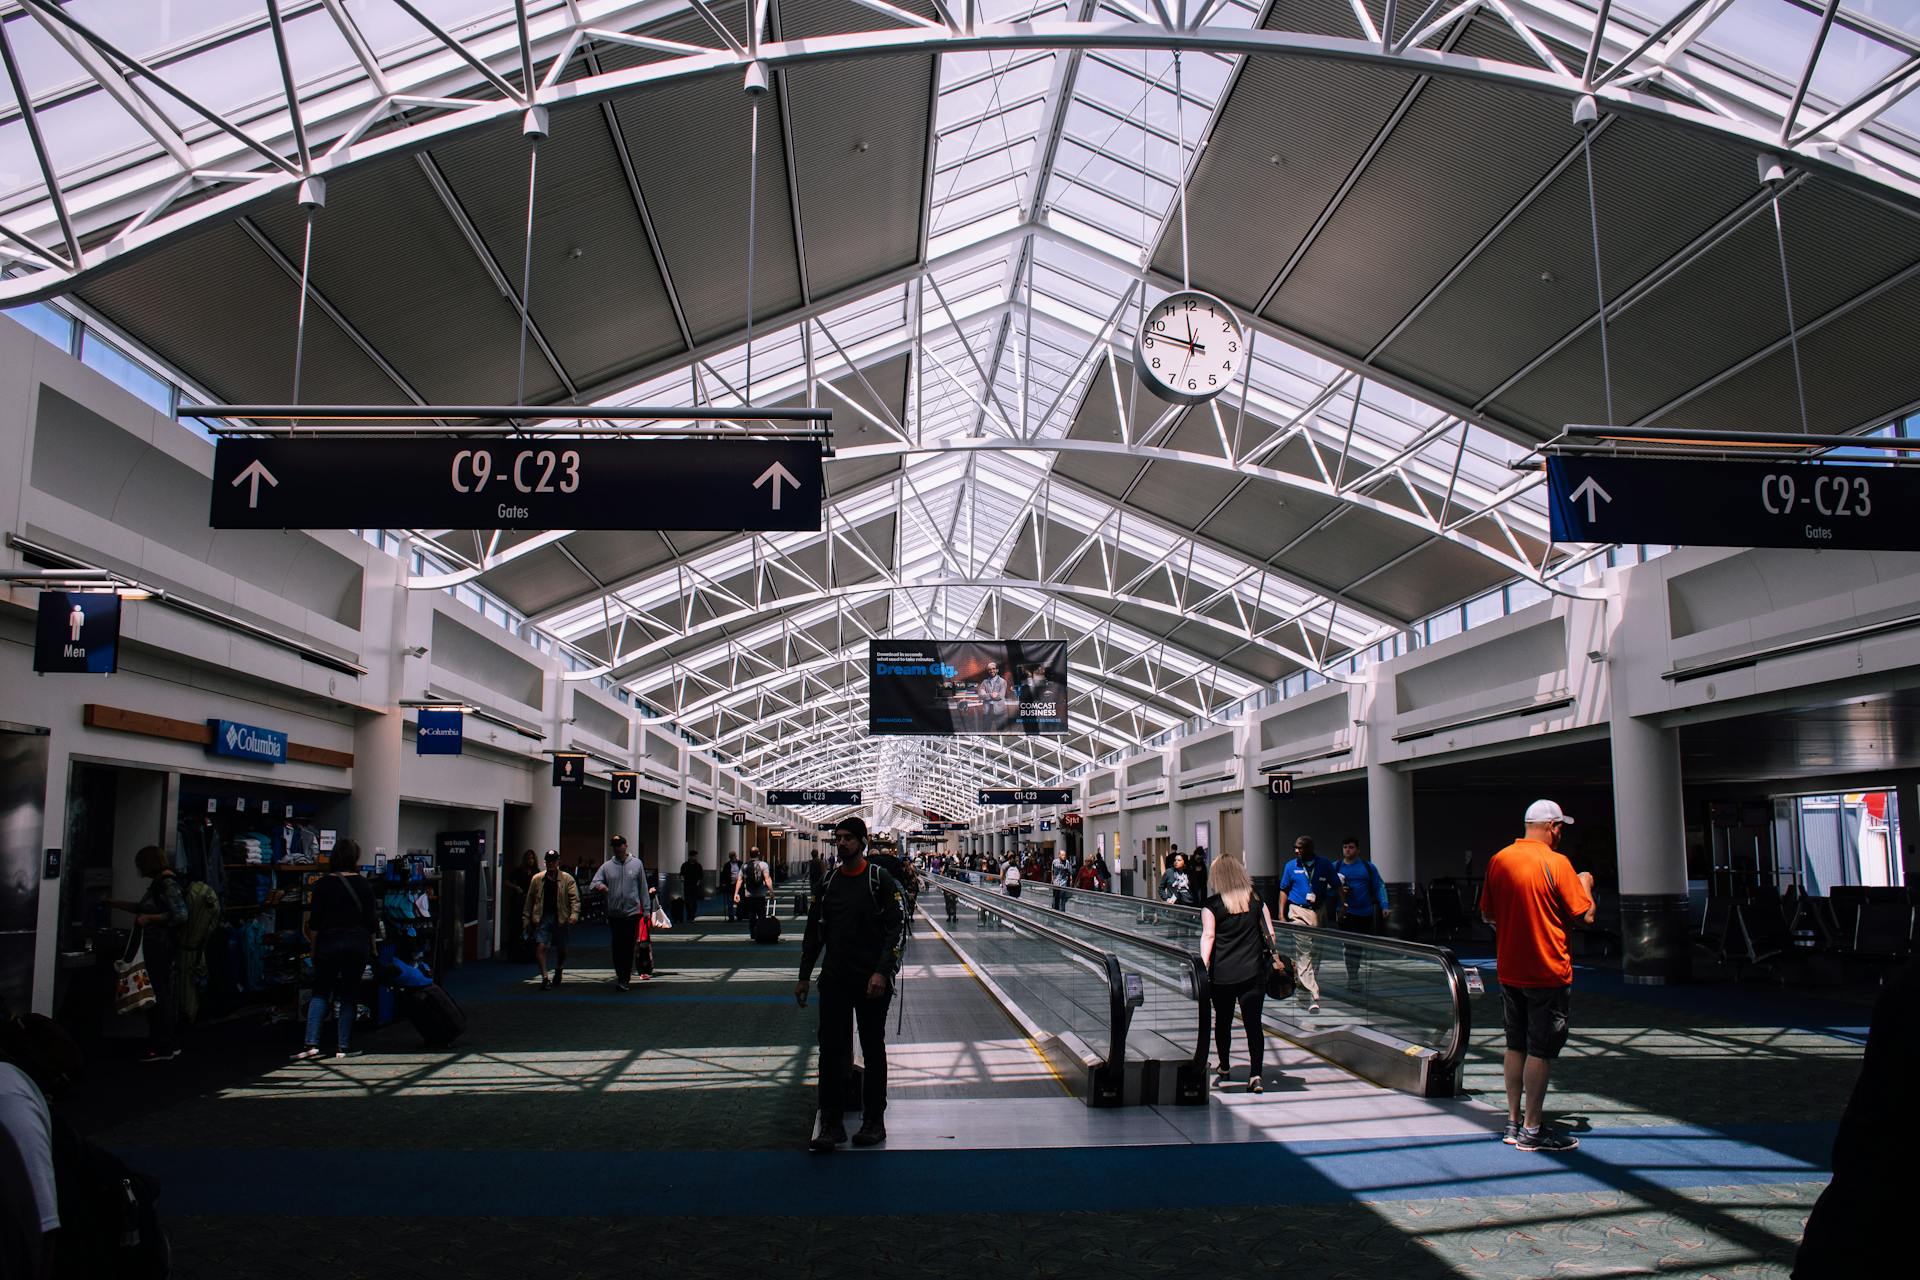 An airport terminal | Source: Pexels